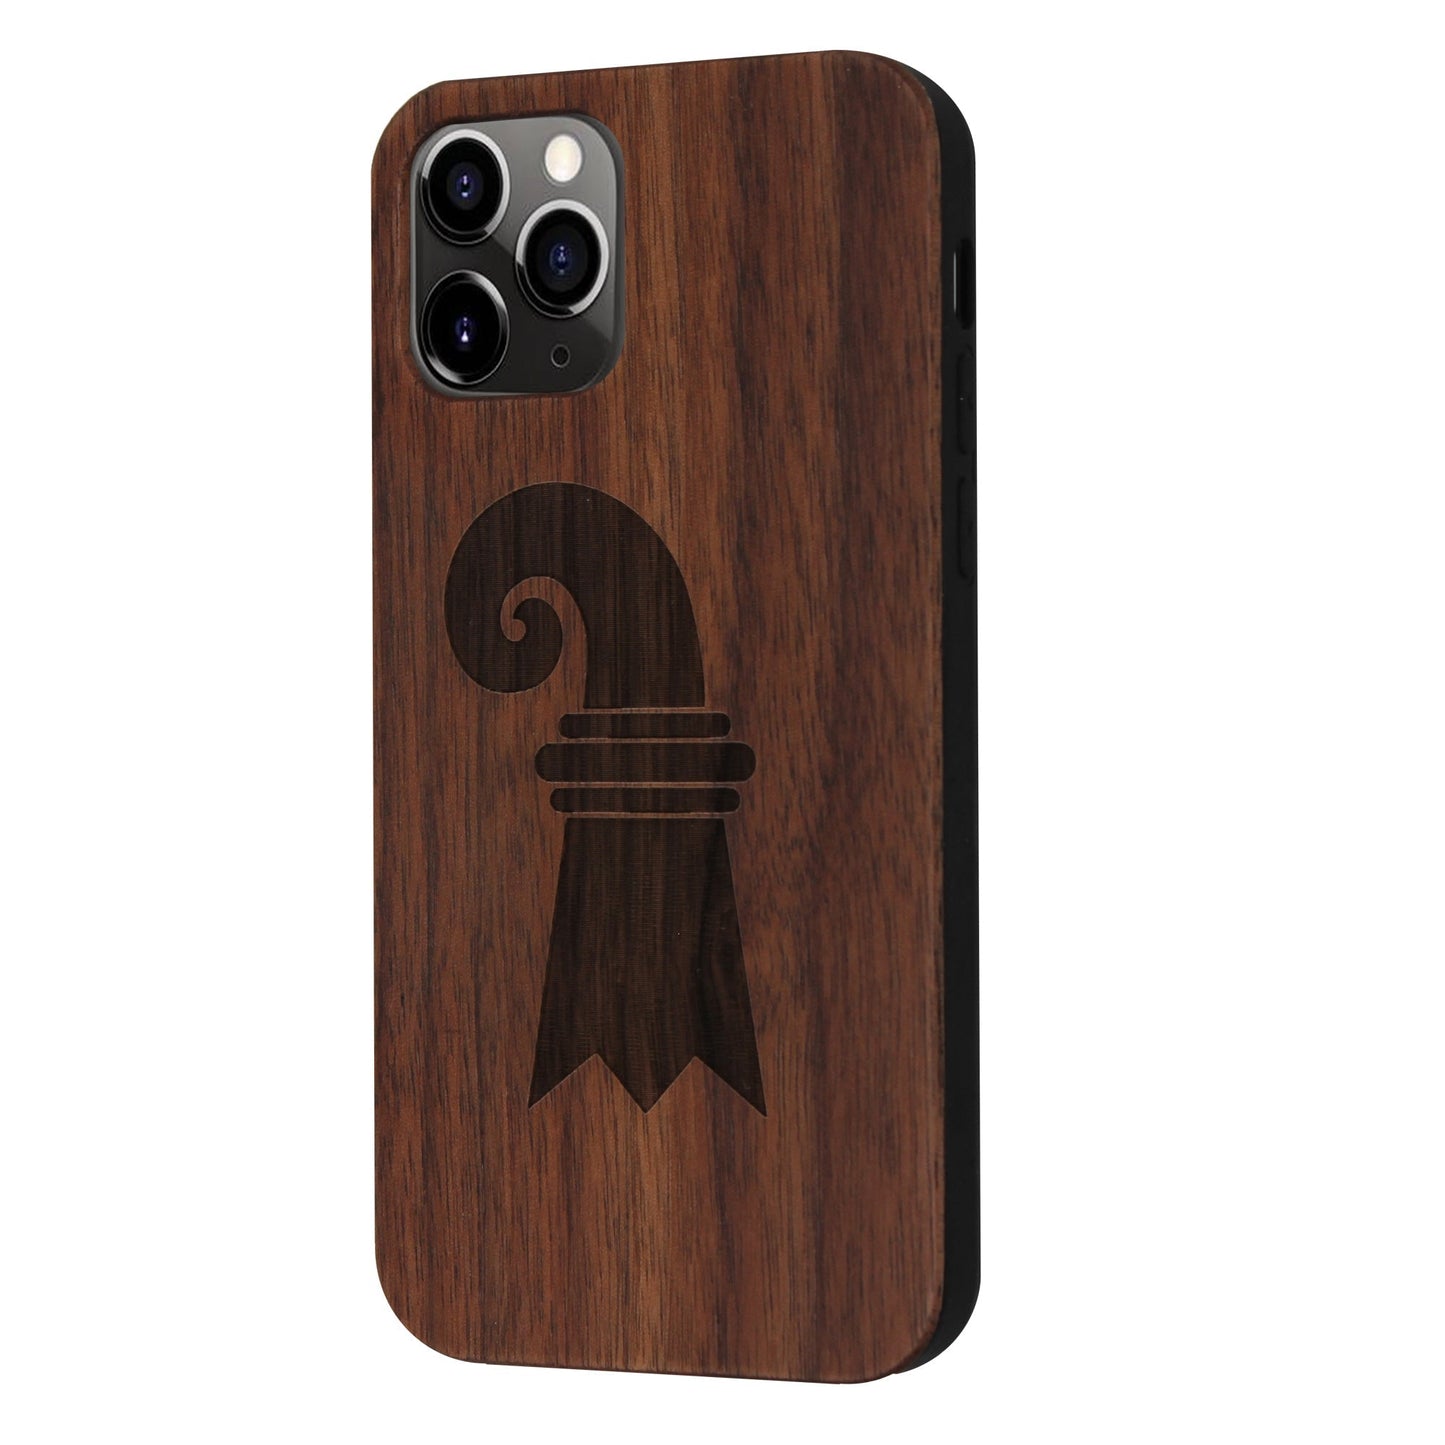 Baslerstab Eden case made of walnut wood for iPhone 11 Pro